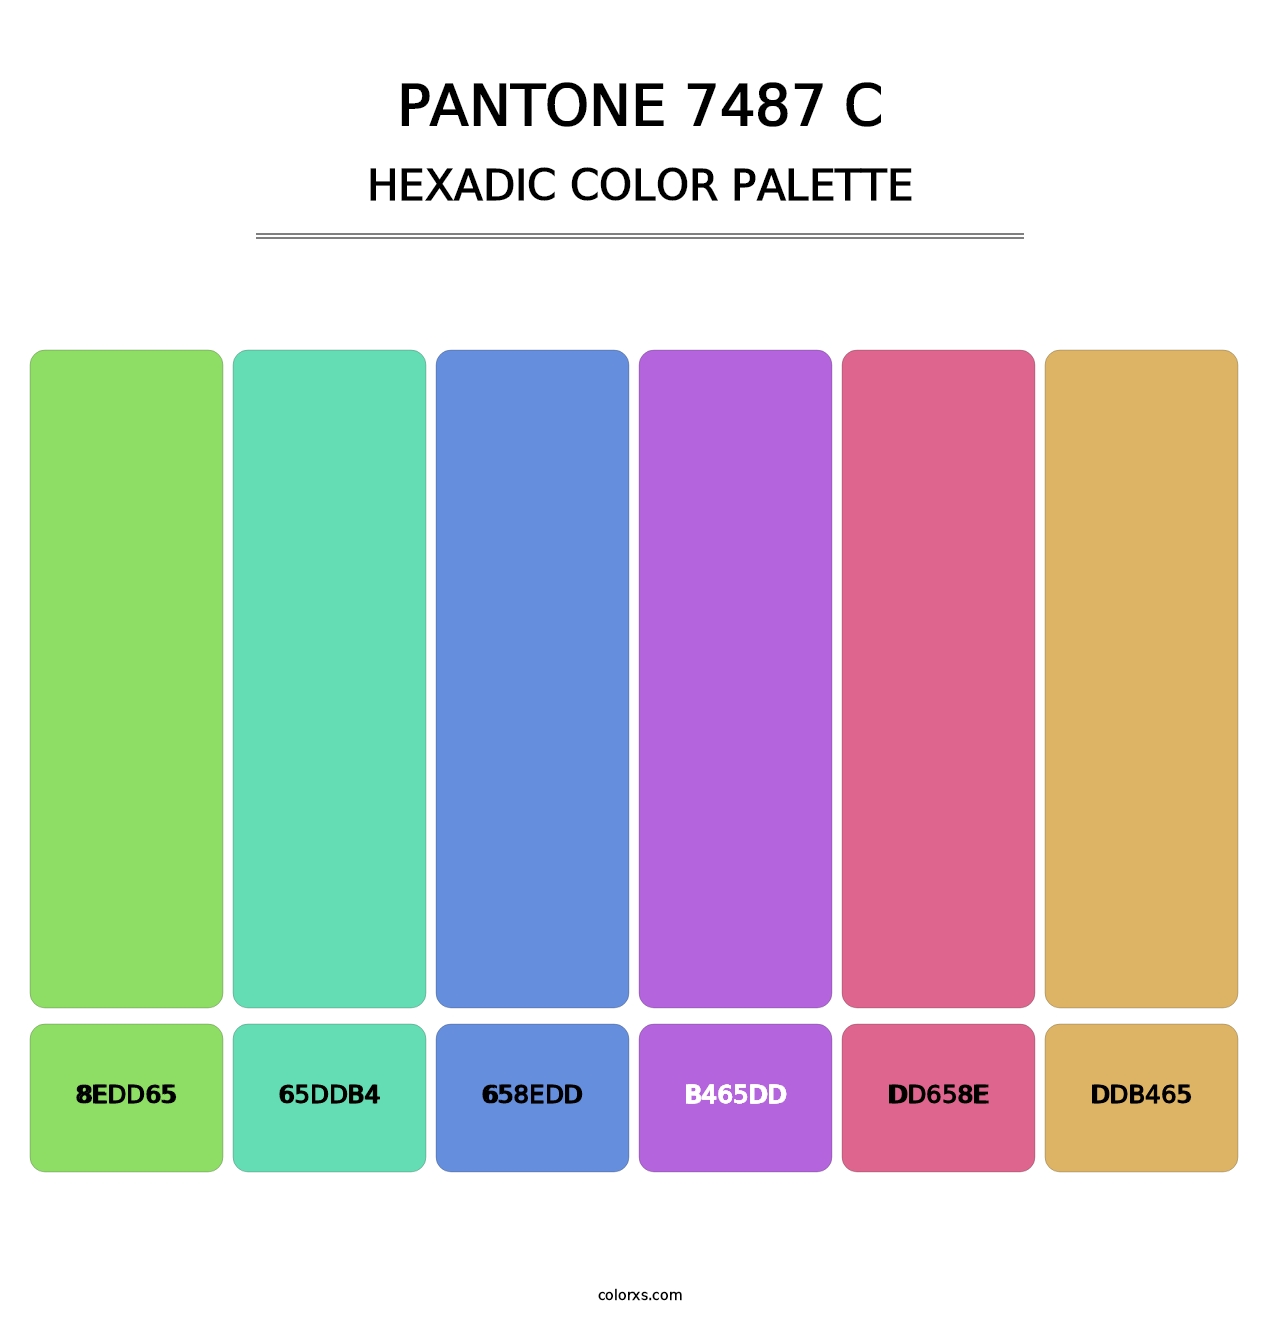 PANTONE 7487 C - Hexadic Color Palette